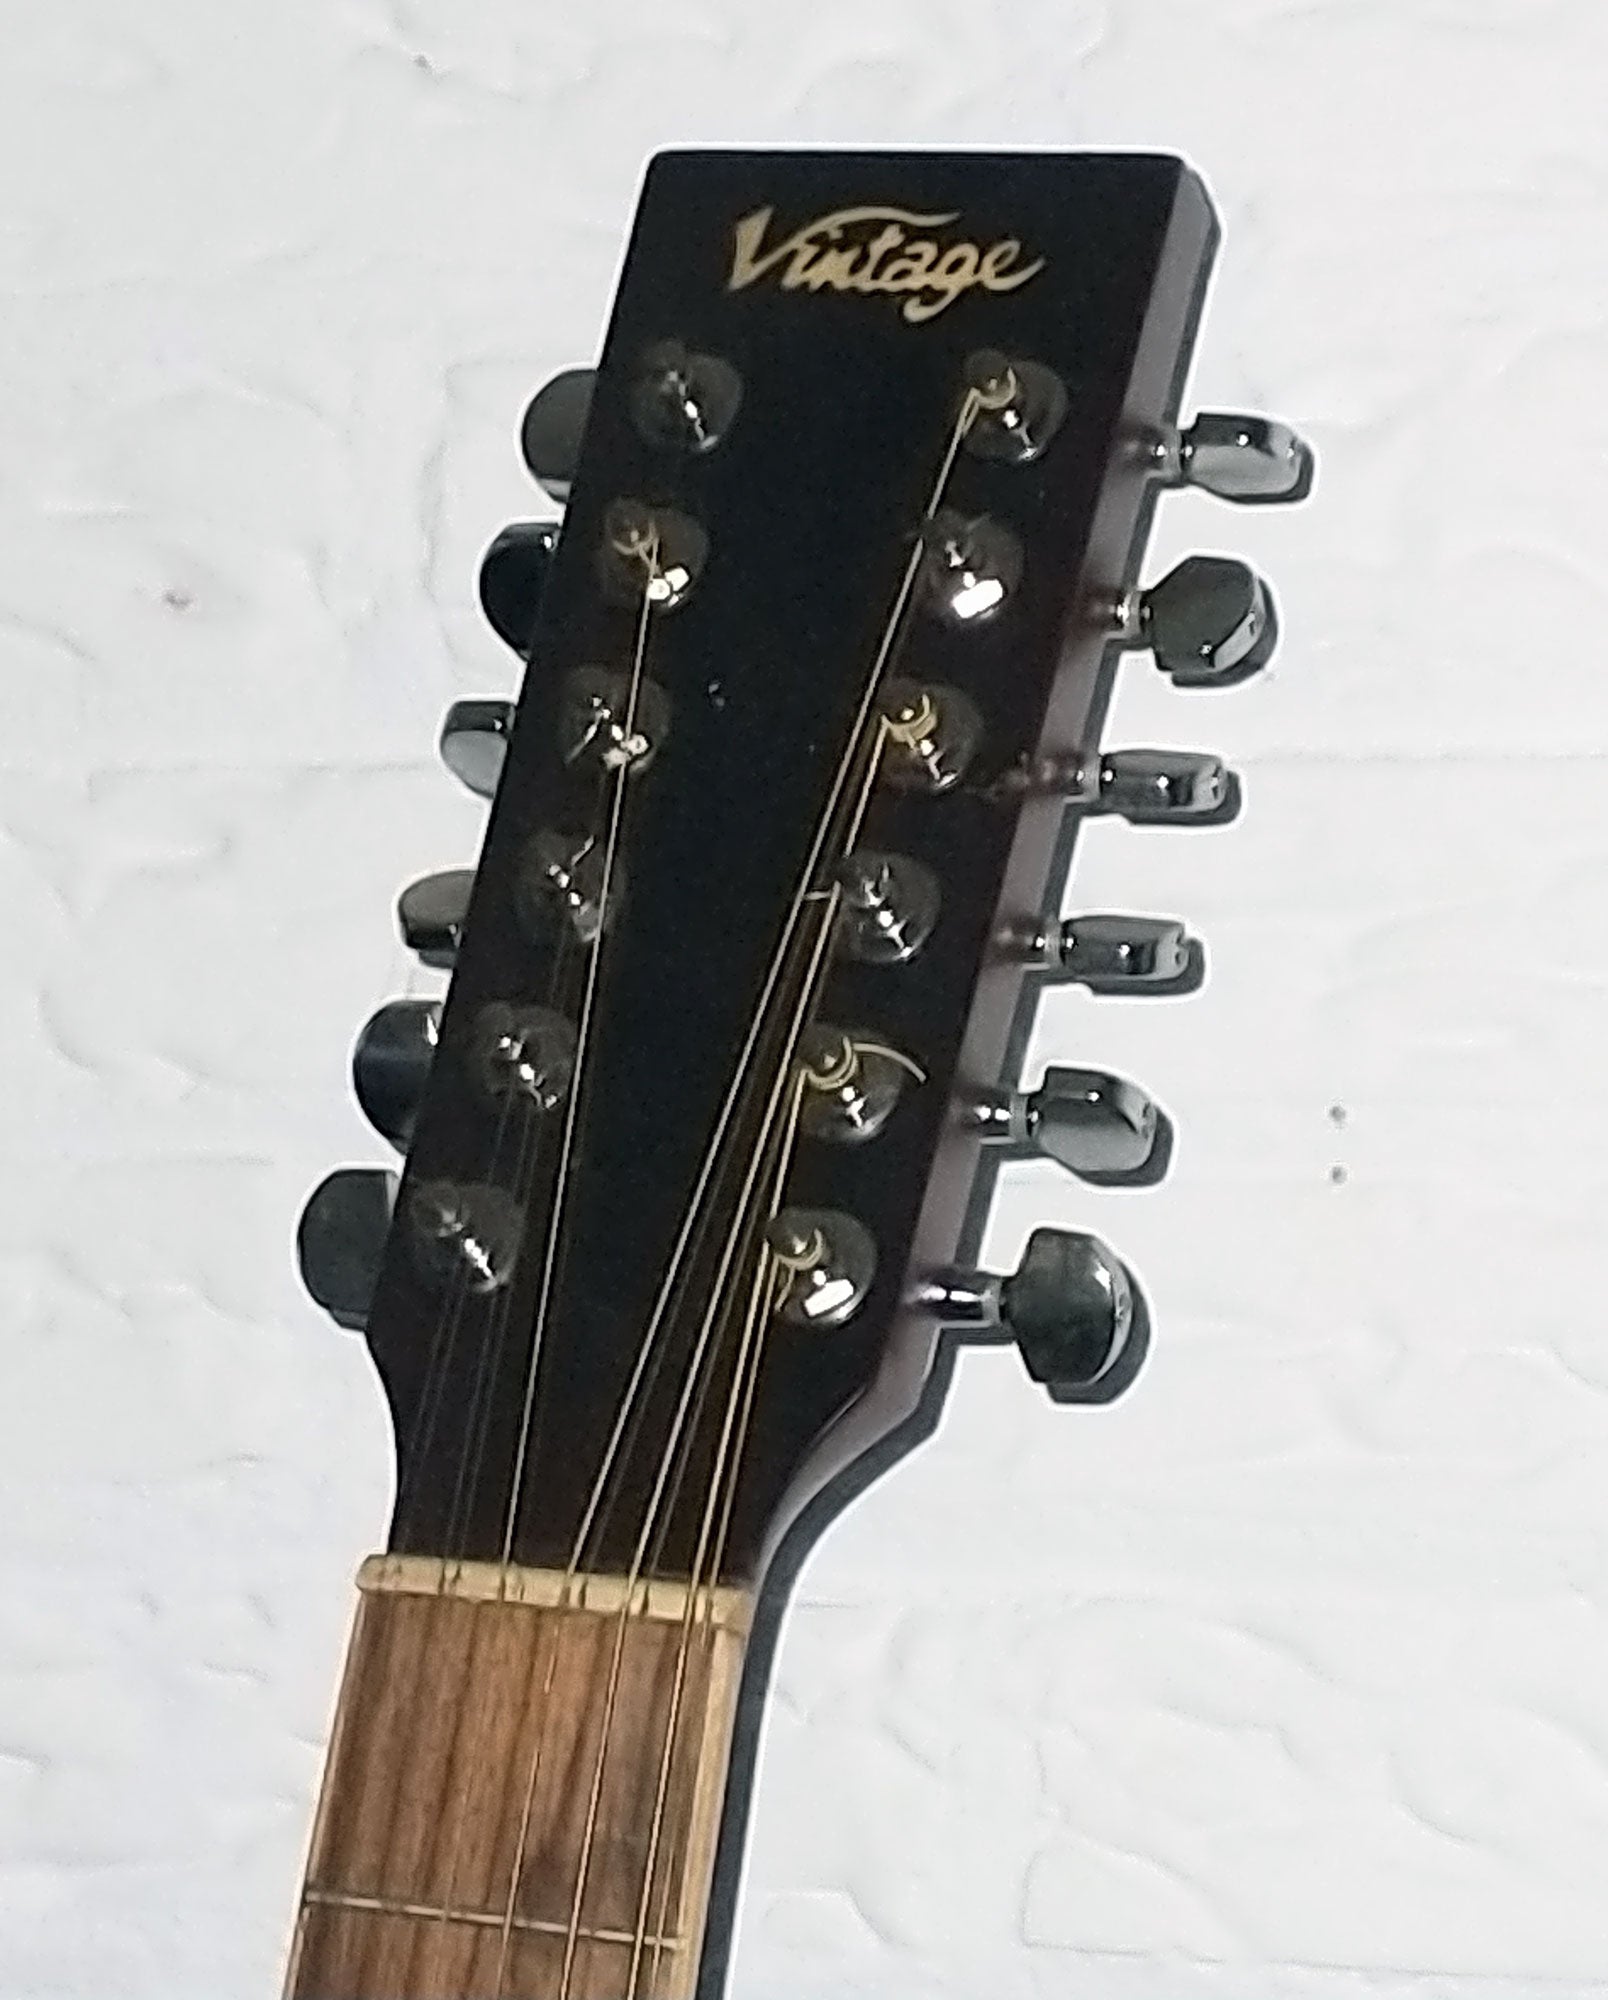 NL30U003 Vintage linkshandige 12-snarige gitaar – MAWA gear